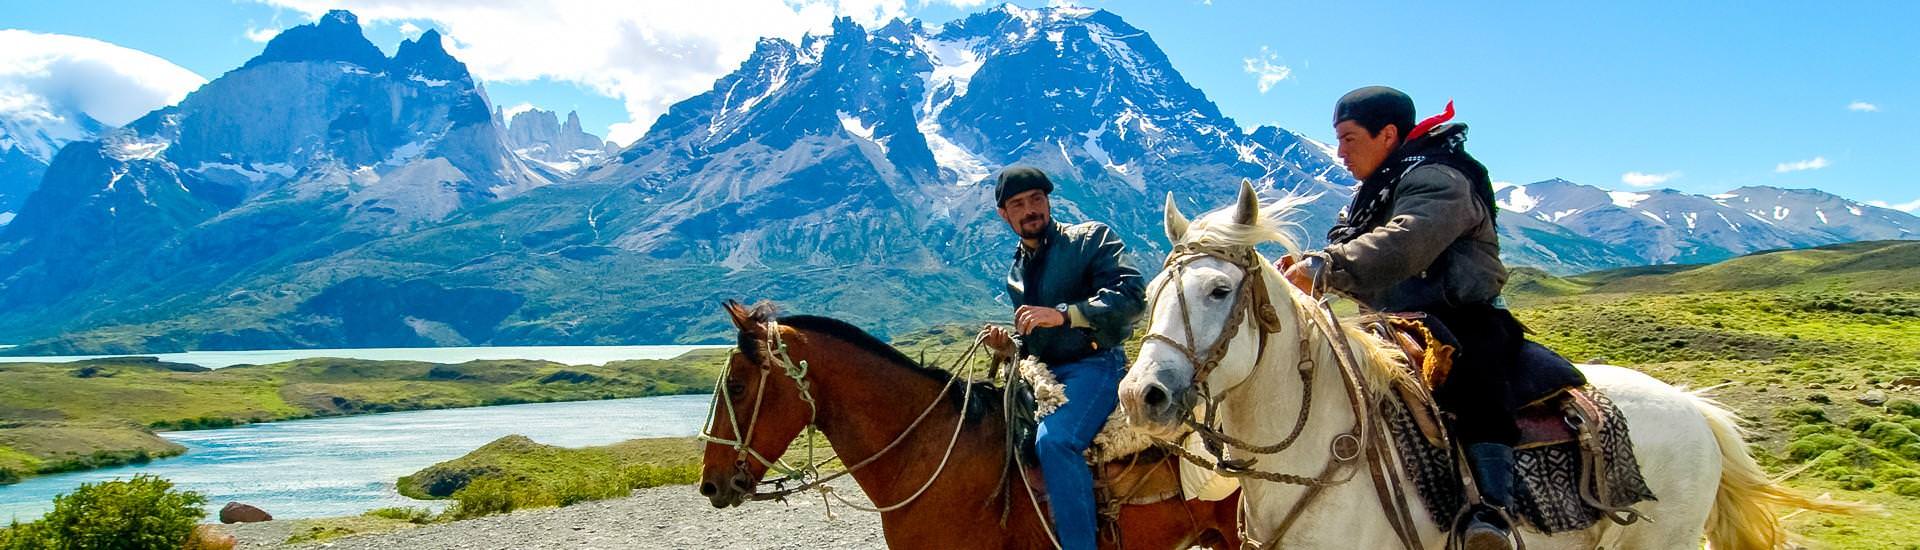 Reiter im Torres del Paine Nationalpark |  Kai-Uwe Kchler, Art & Adventure / Chamleon